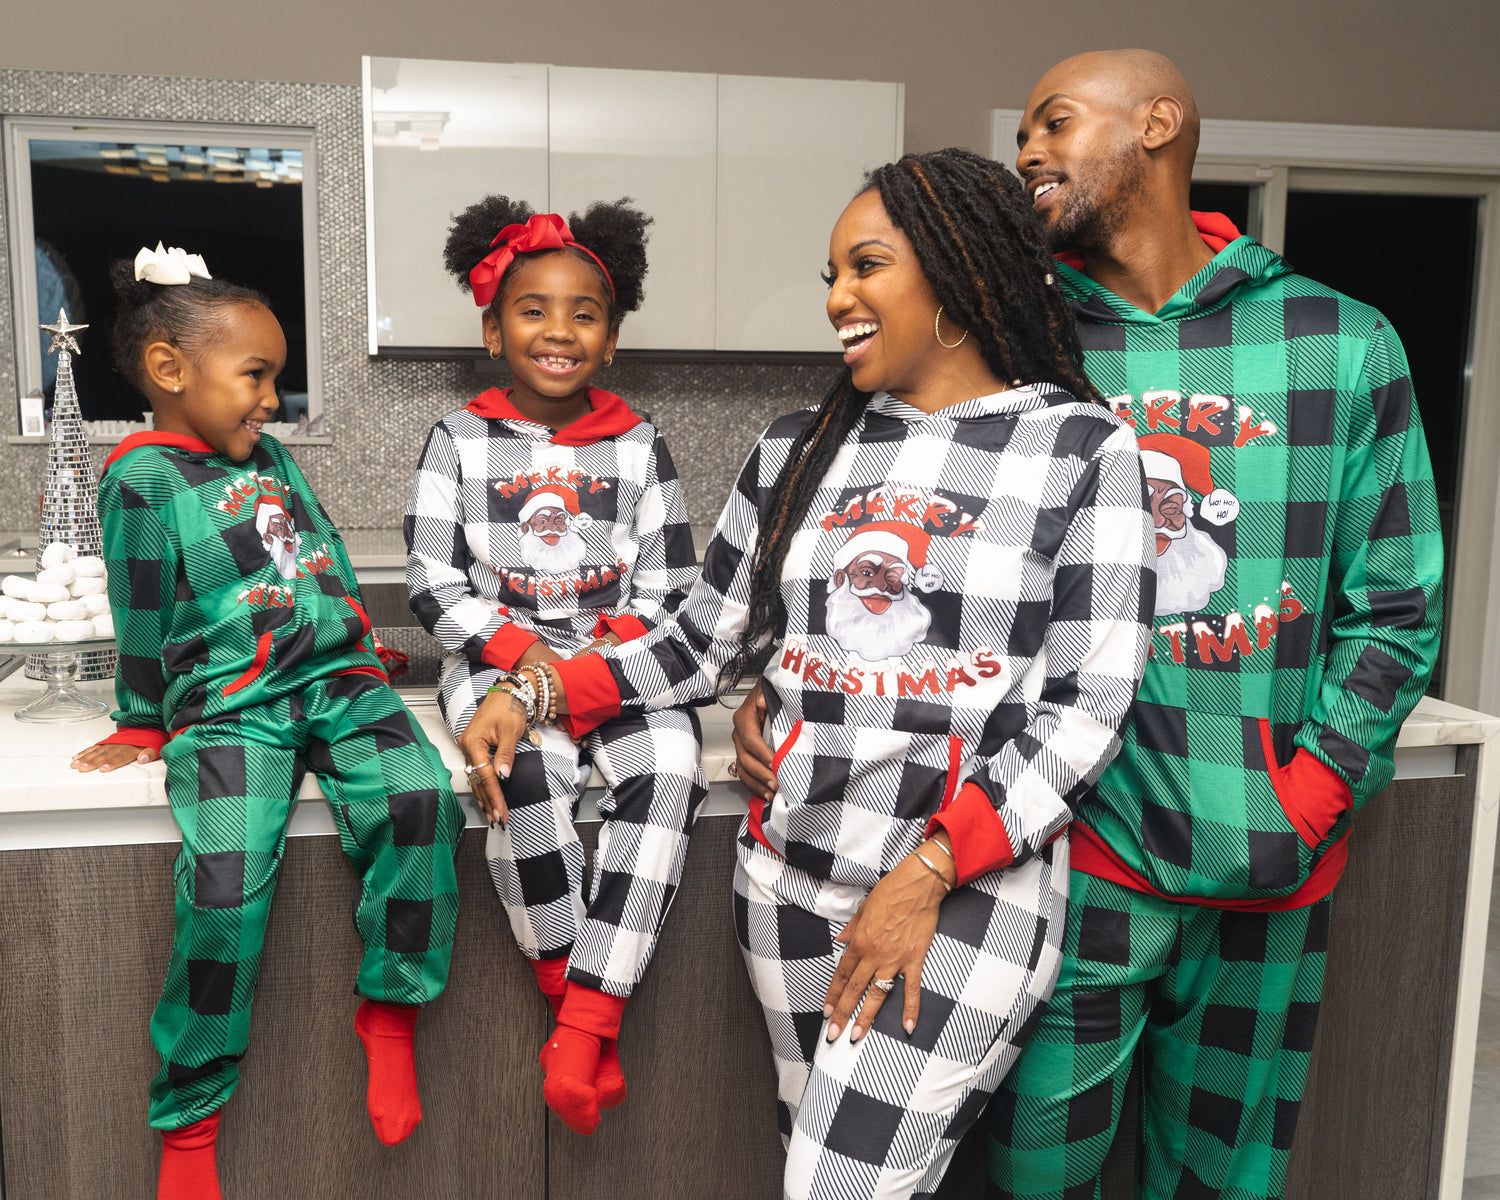 Christmas Crew 2022 Family Pajamas For Christmas - Holli Pajama Set